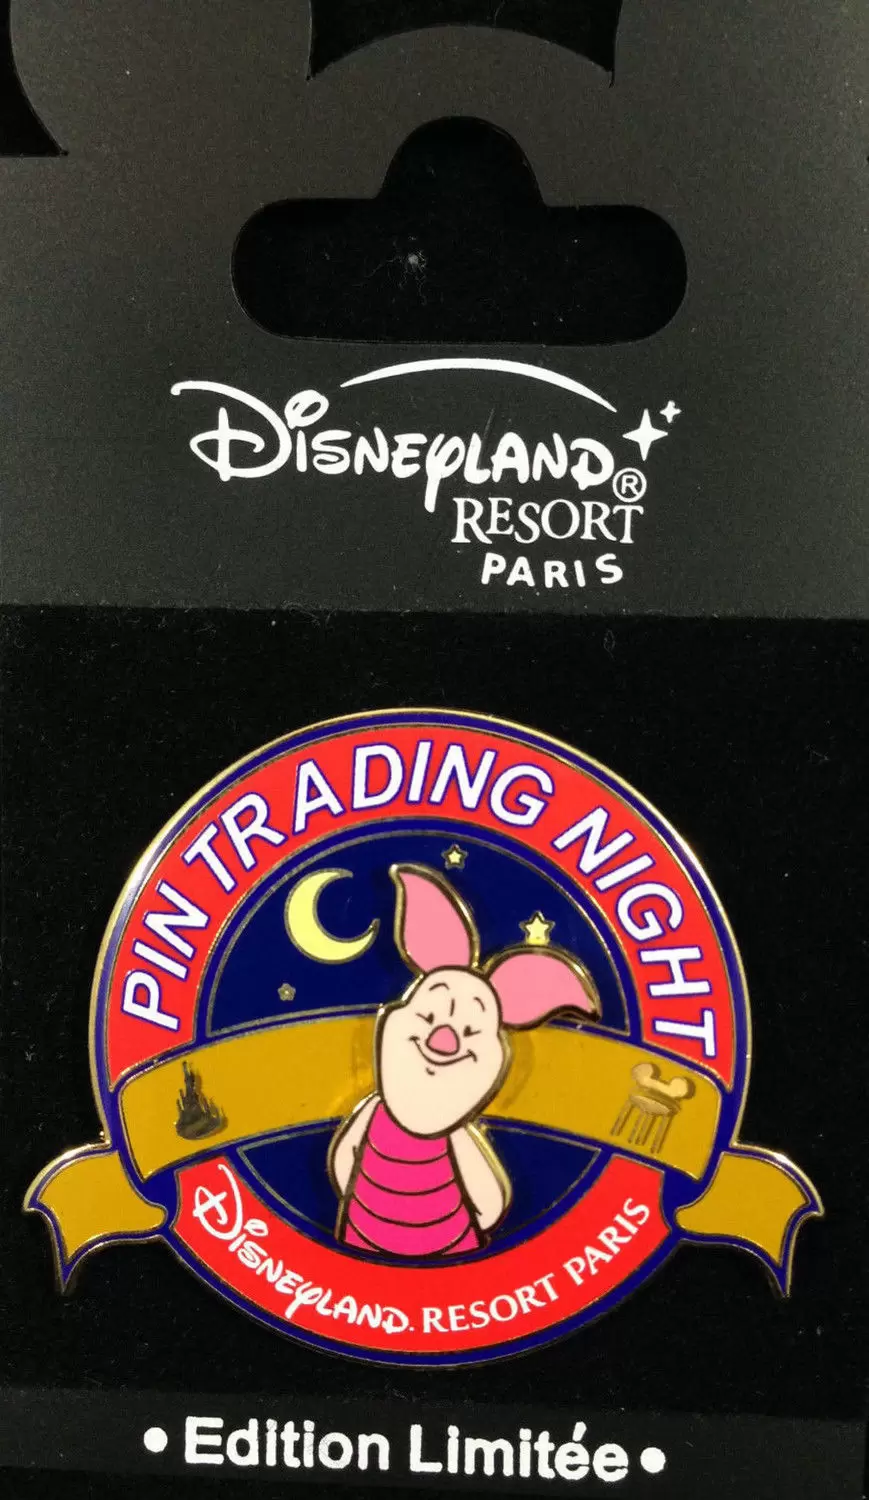 Disney - Pin Trading Night - Porcinet